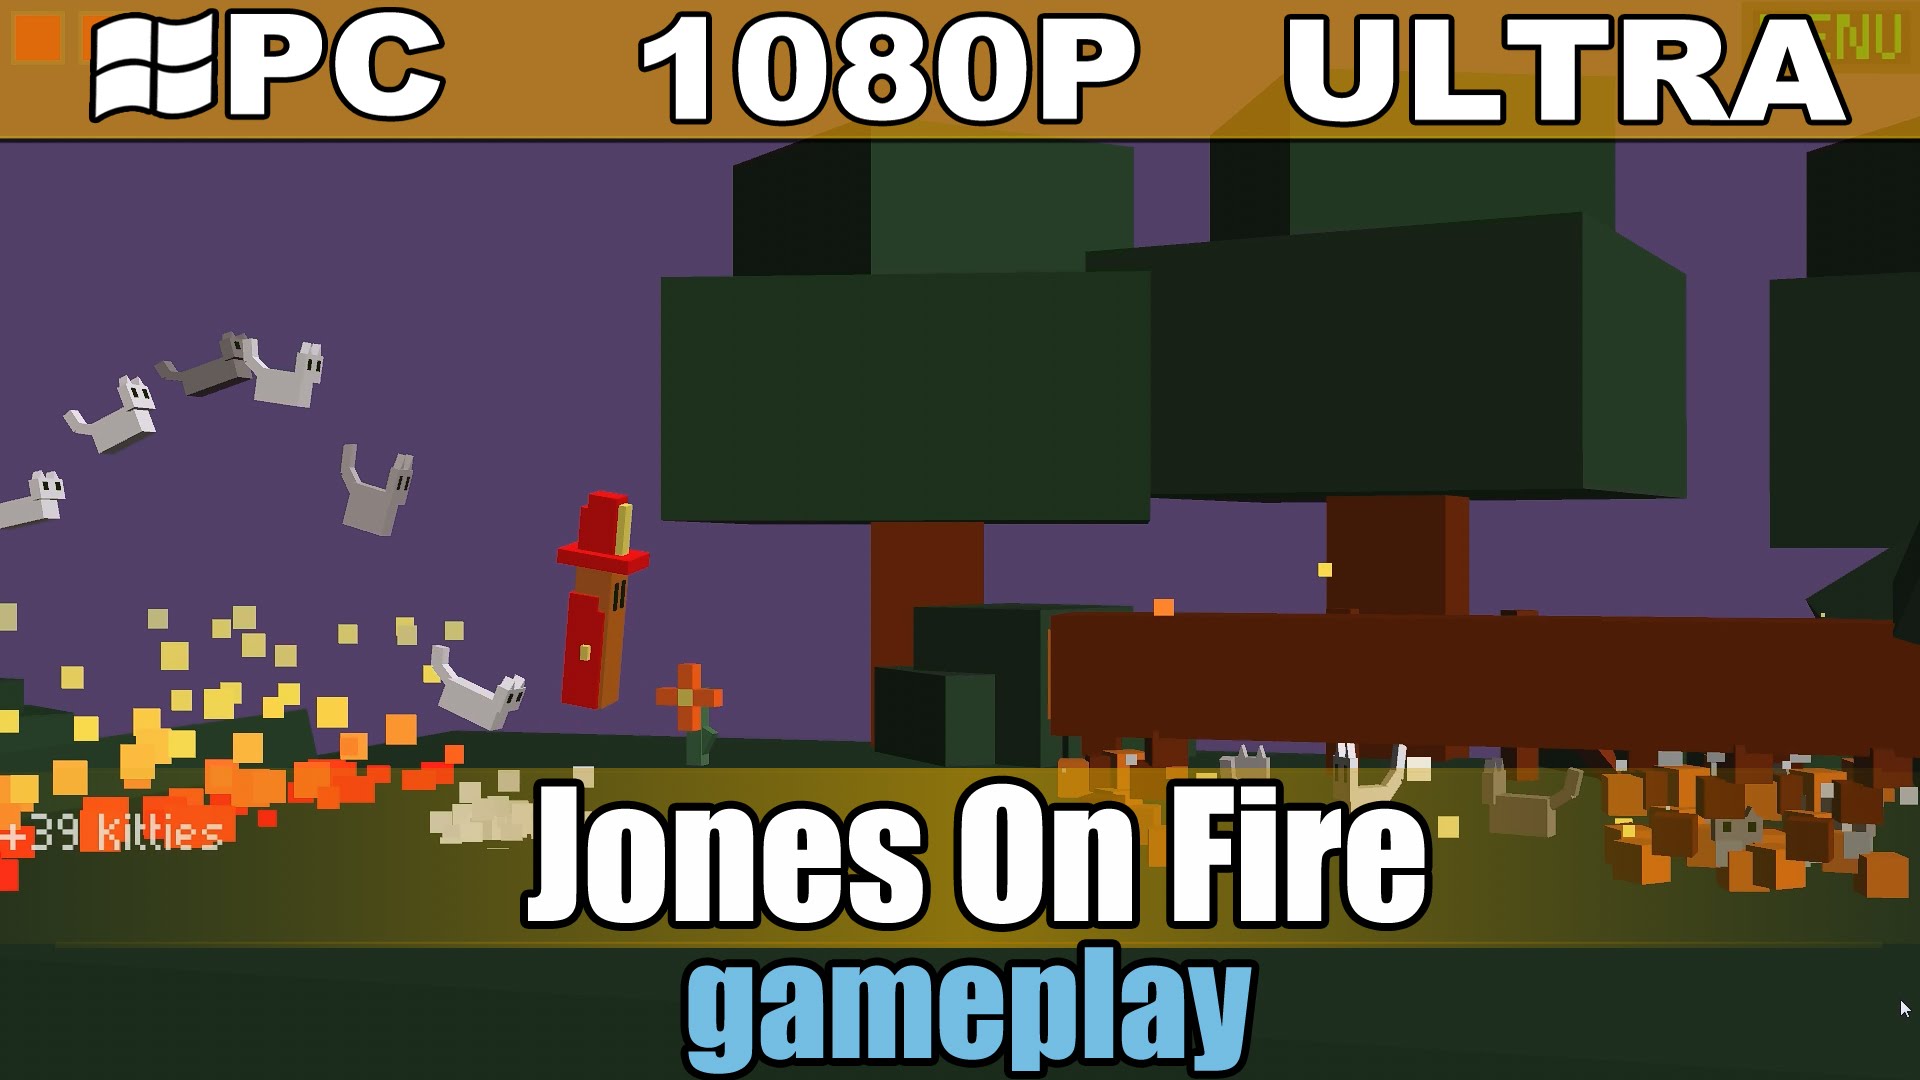 Jones On Fire Backgrounds, Compatible - PC, Mobile, Gadgets| 1920x1080 px